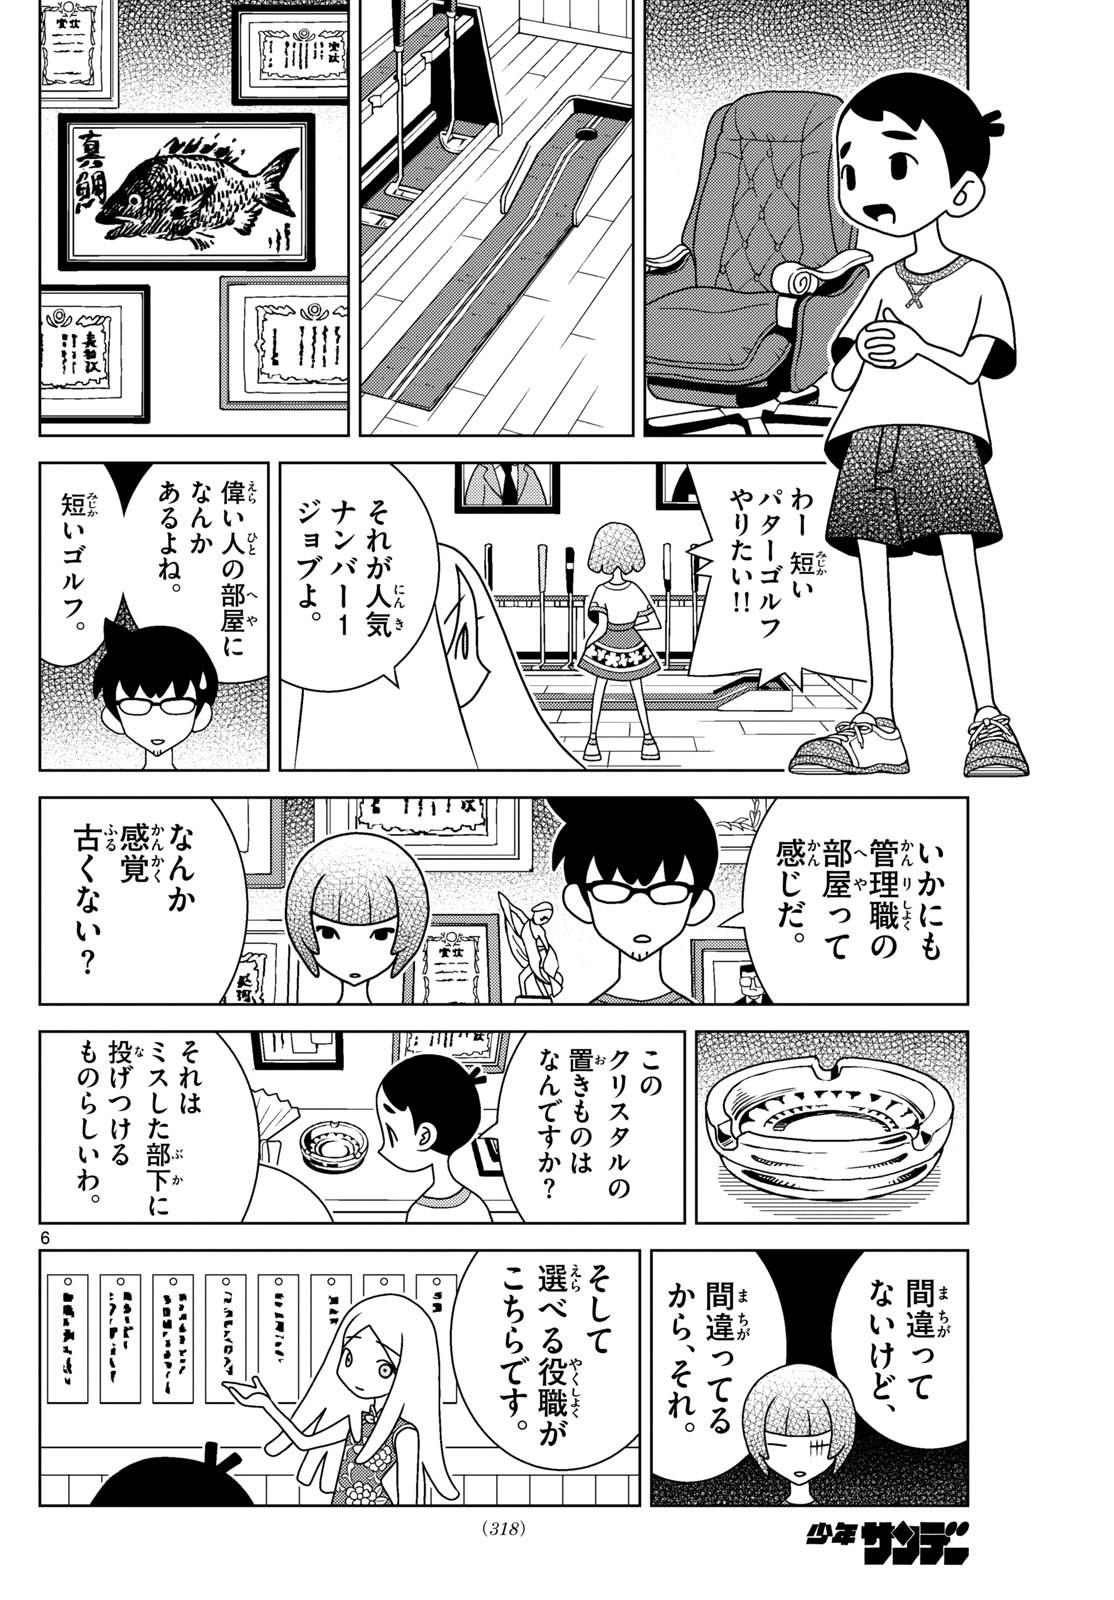 Shibuya Near Family - Chapter 066 - Page 6